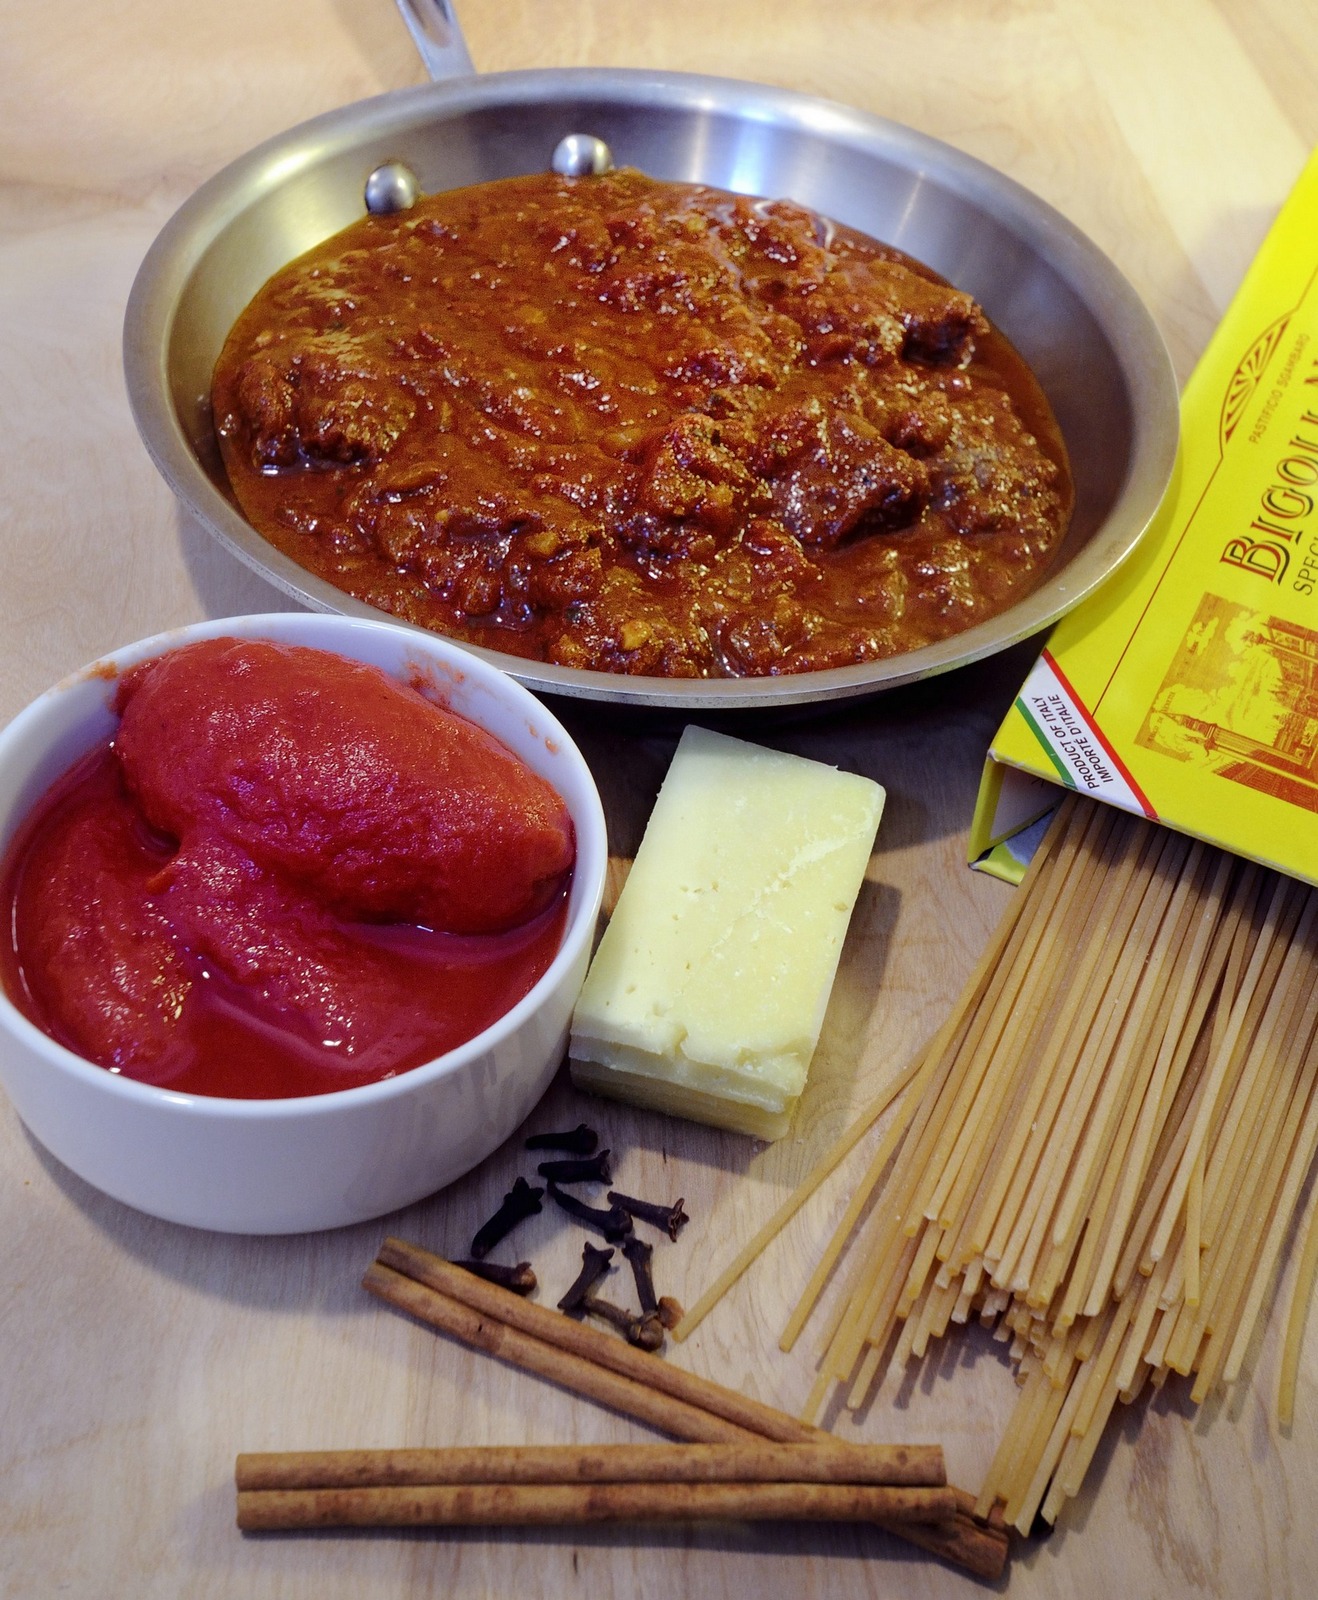 Pan of Prepared Mary's Spaghetti Sauce With Tomatoes, Spaghetti, Pecorino, Spices